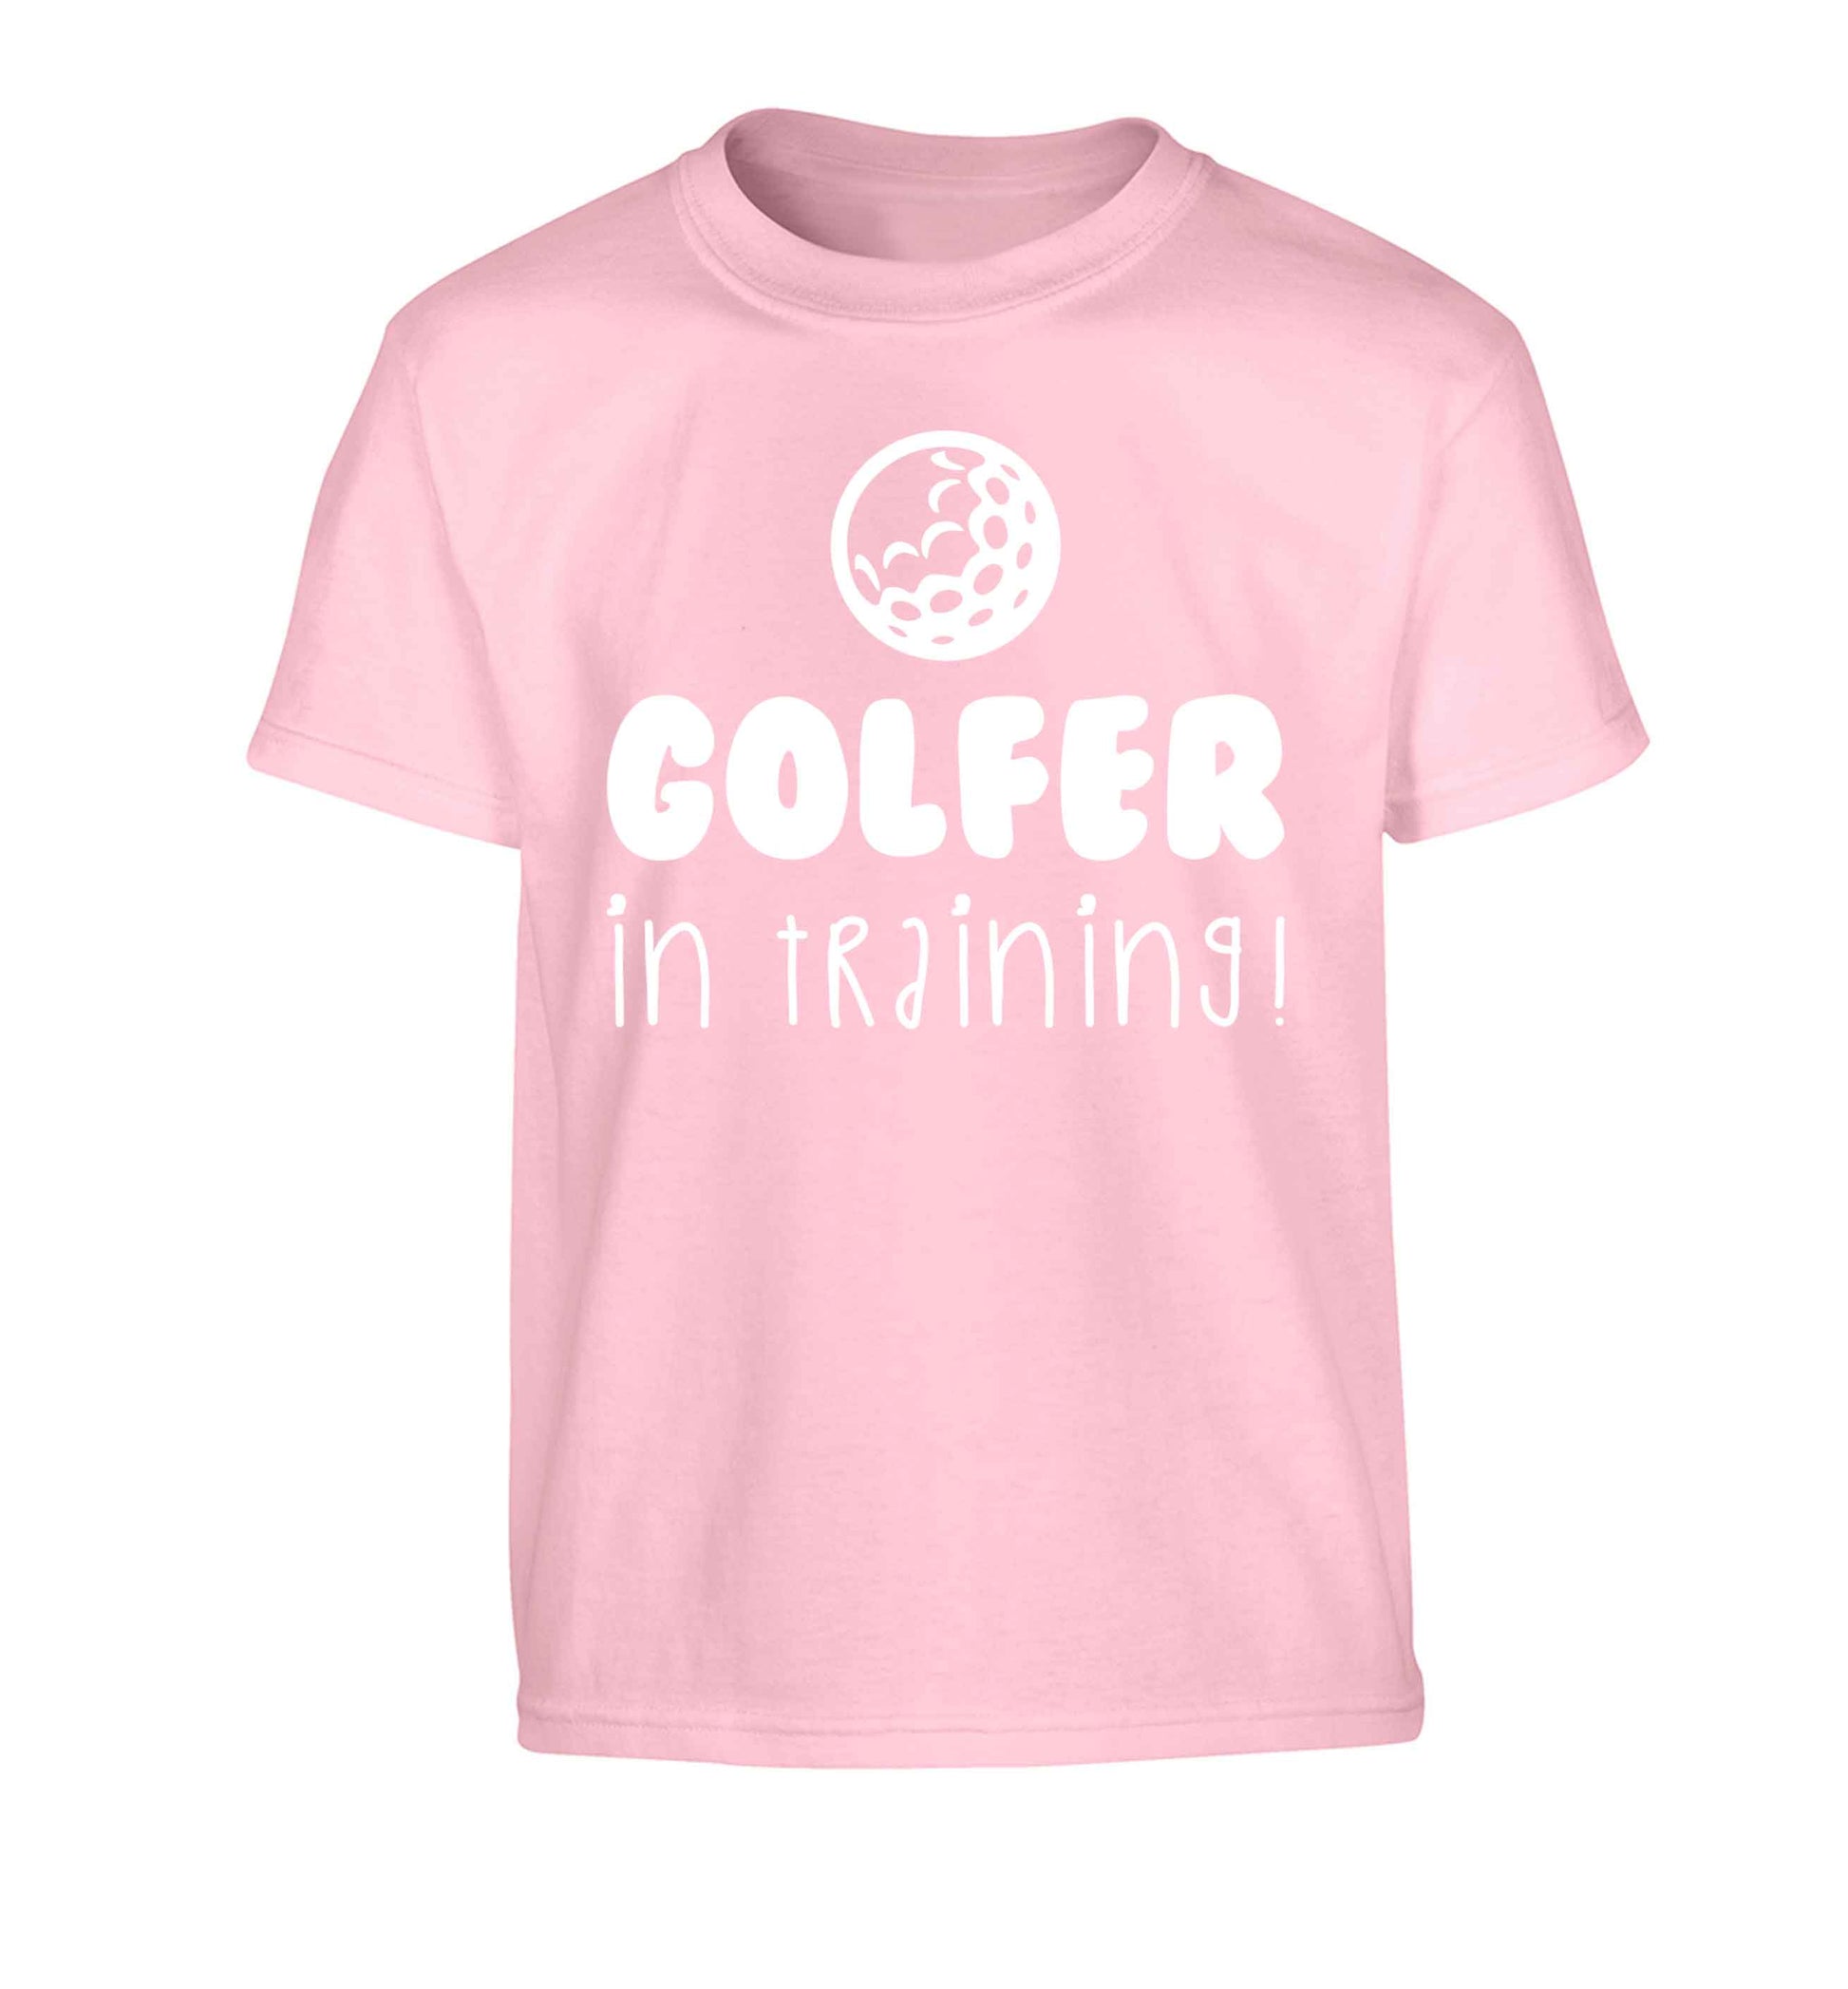 Golfer in training Children's light pink Tshirt 12-13 Years